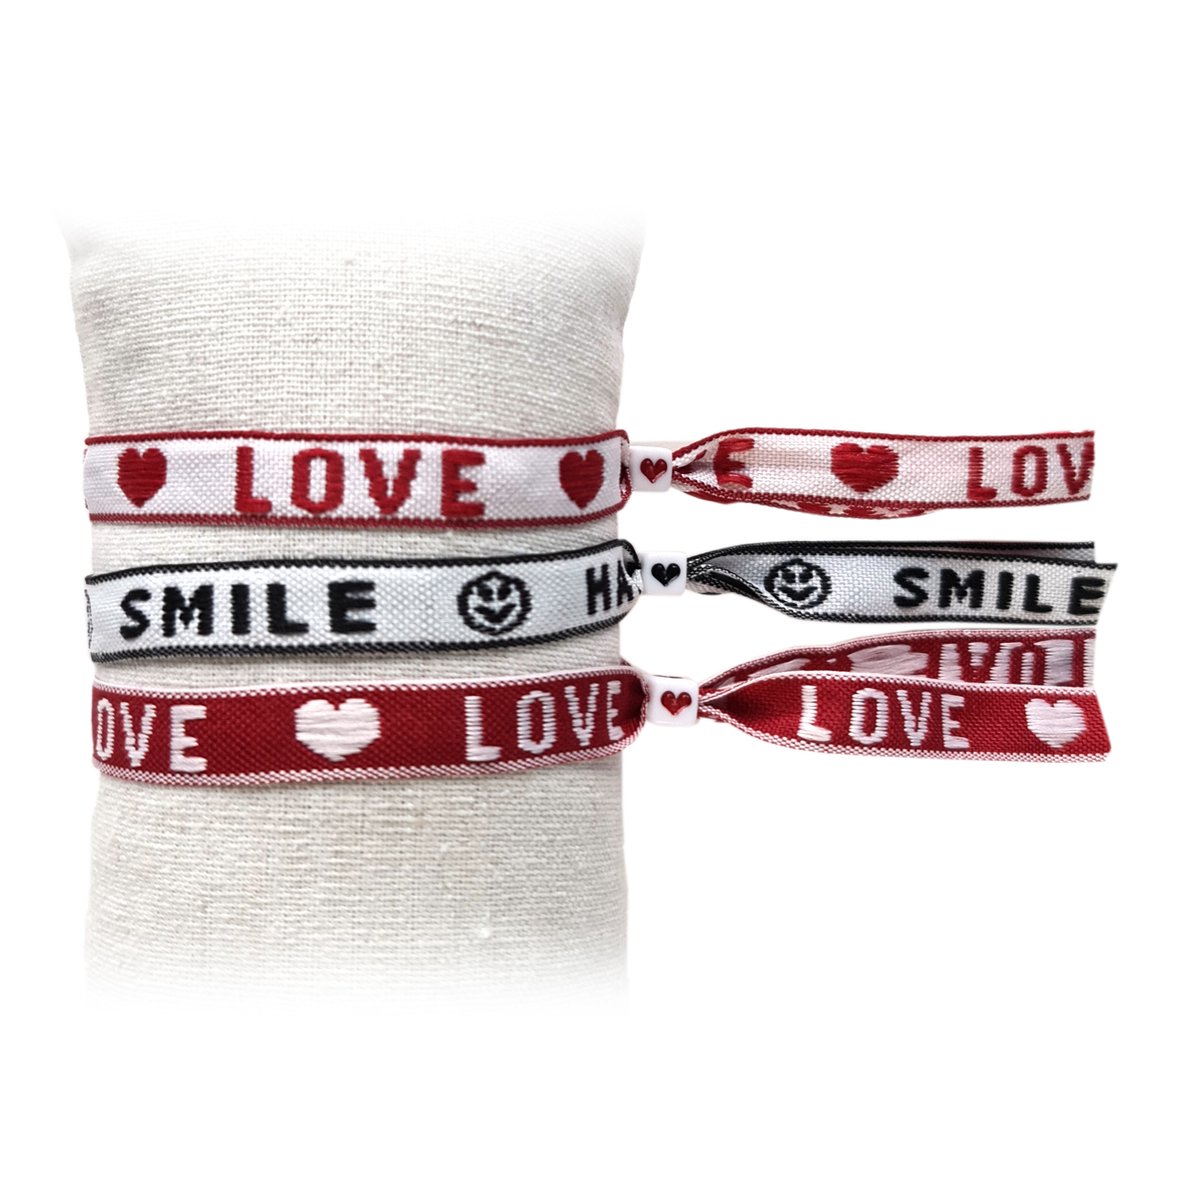 Principessa set van 3 trendy Festival lint armbandjes met tekstlint - Tekst: Love, Happy smile, Love - Kleur: Wit, Rood, Zwart